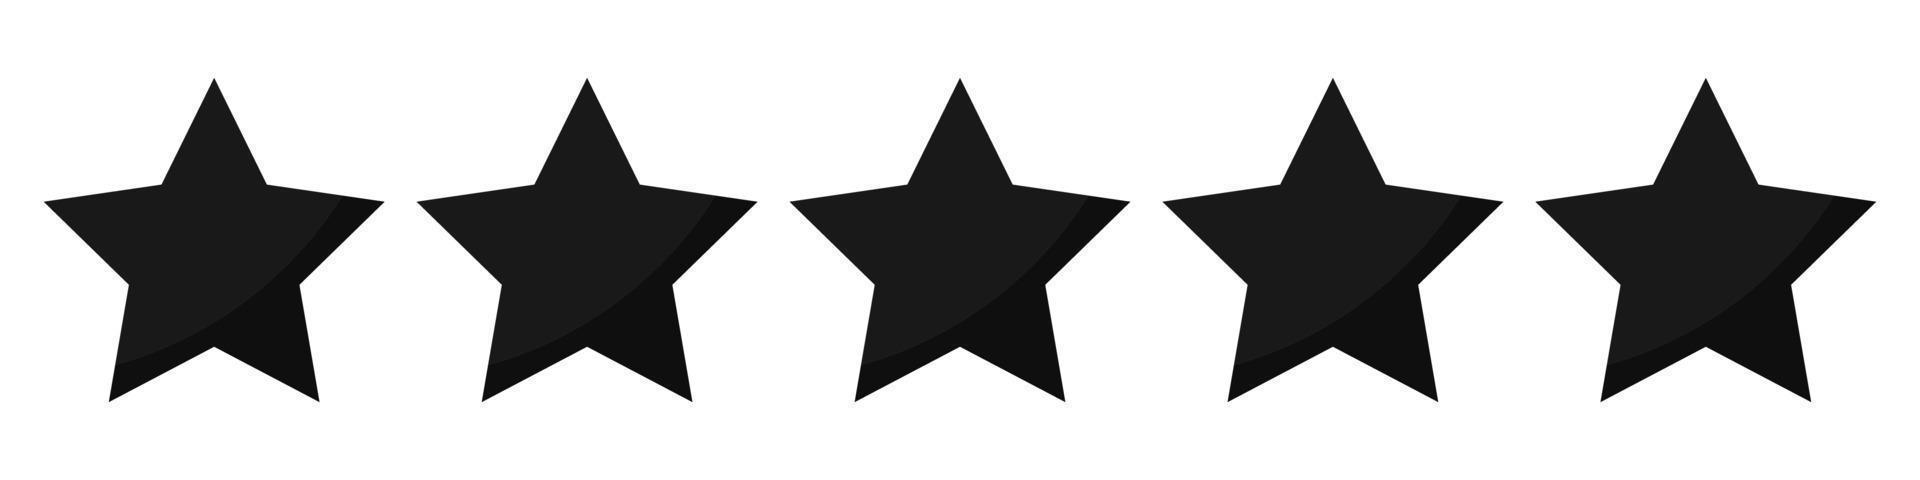 Fünf-Sterne-Qualitätsbewertungssymbole. 5-Sterne-Symbol. Fünf-Sterne-Zeichen. Bewertungssymbol. Vektor-Illustration vektor